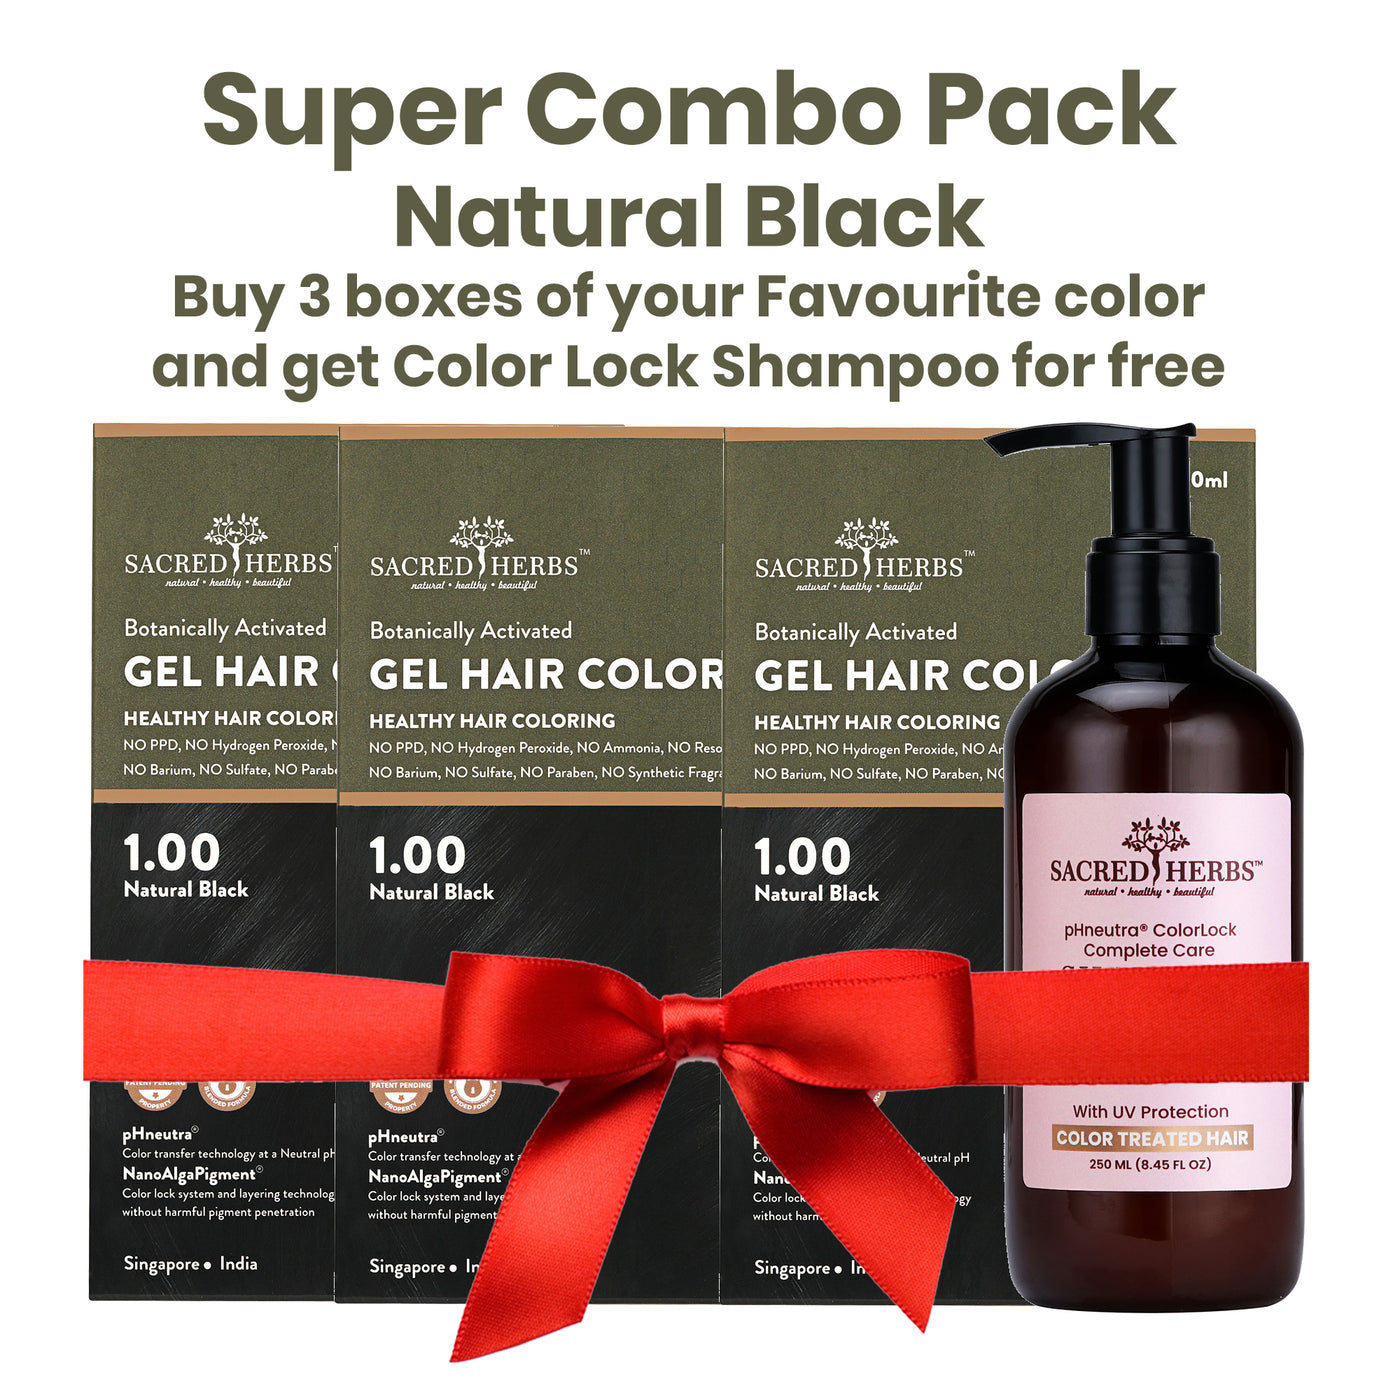 Super Combo Pack Natural Black 1.00 SacredHerbs Botanically Activated Gel Hair Color